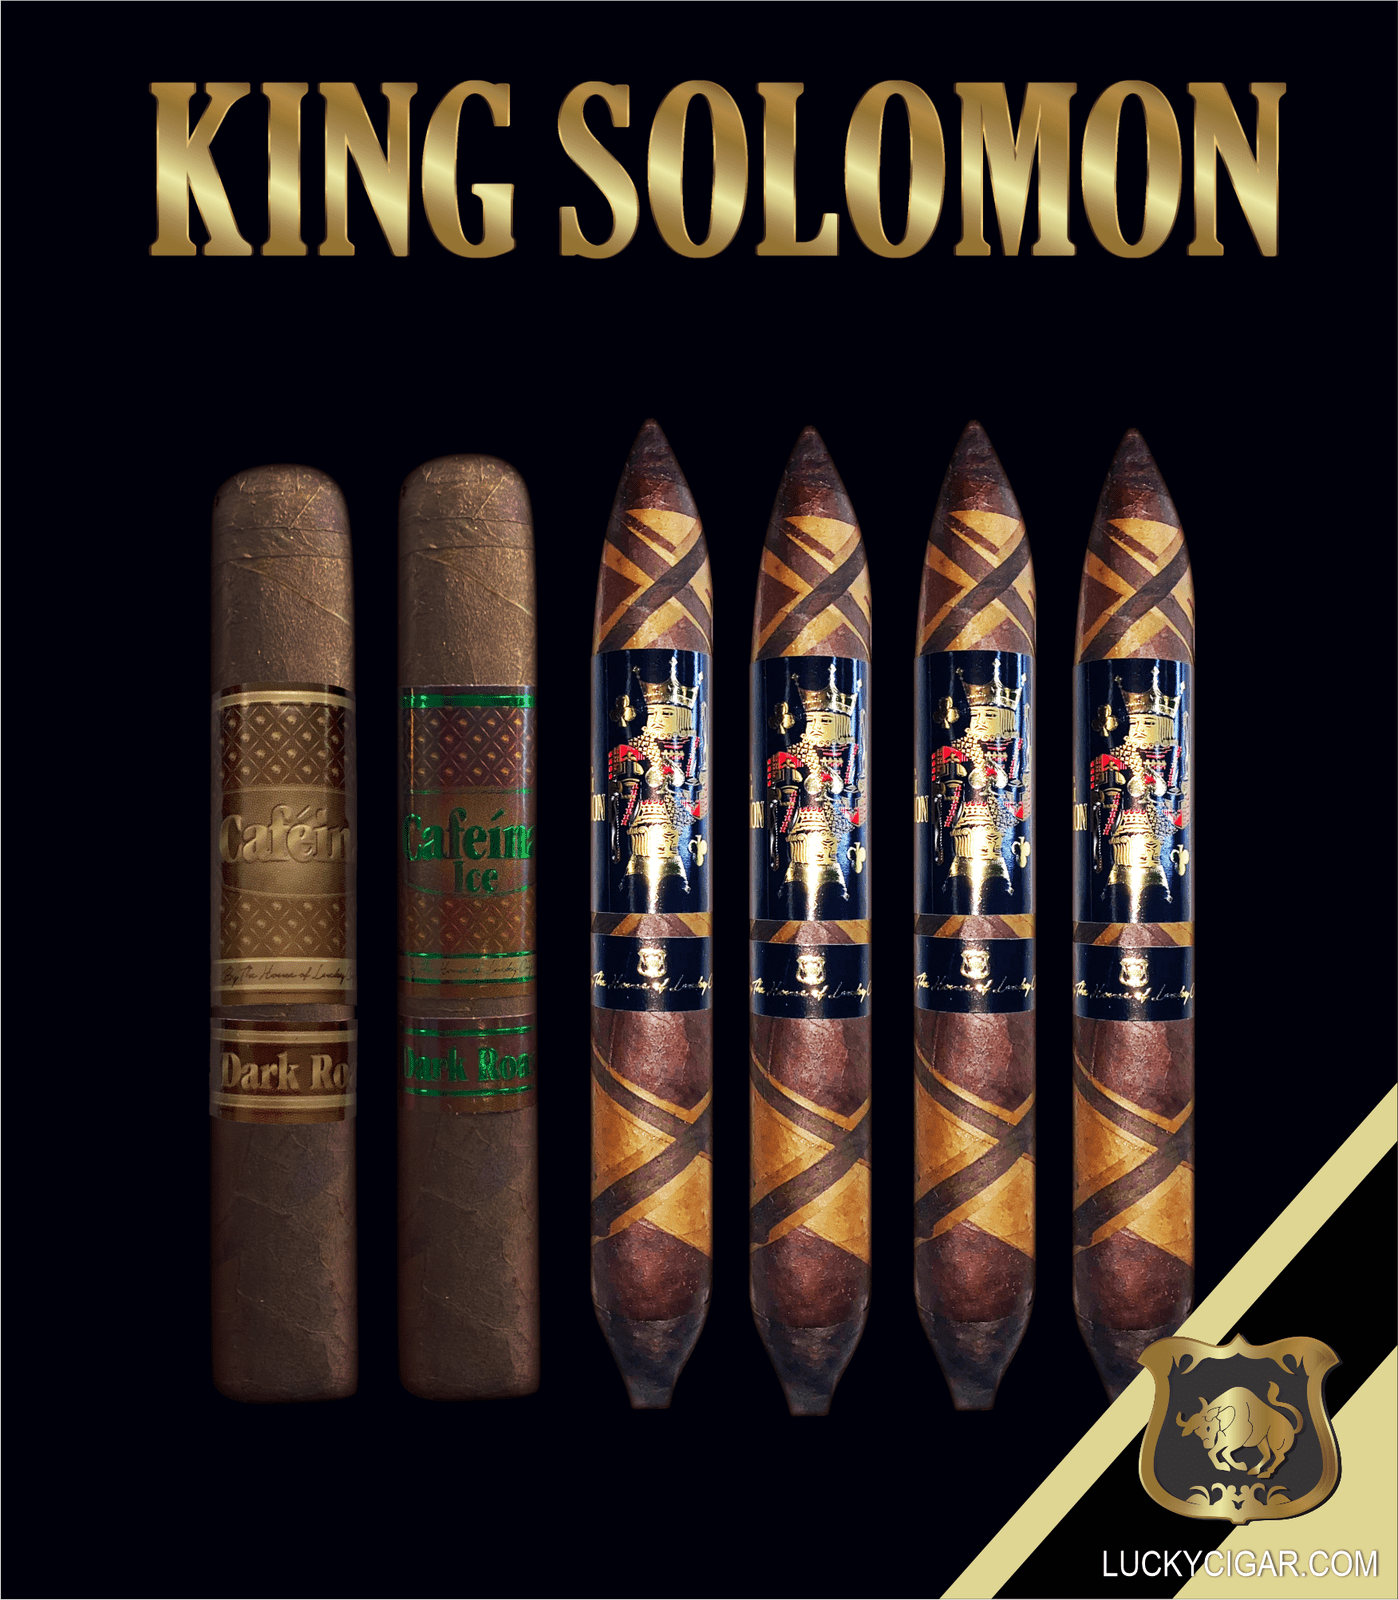 King Solomon set :